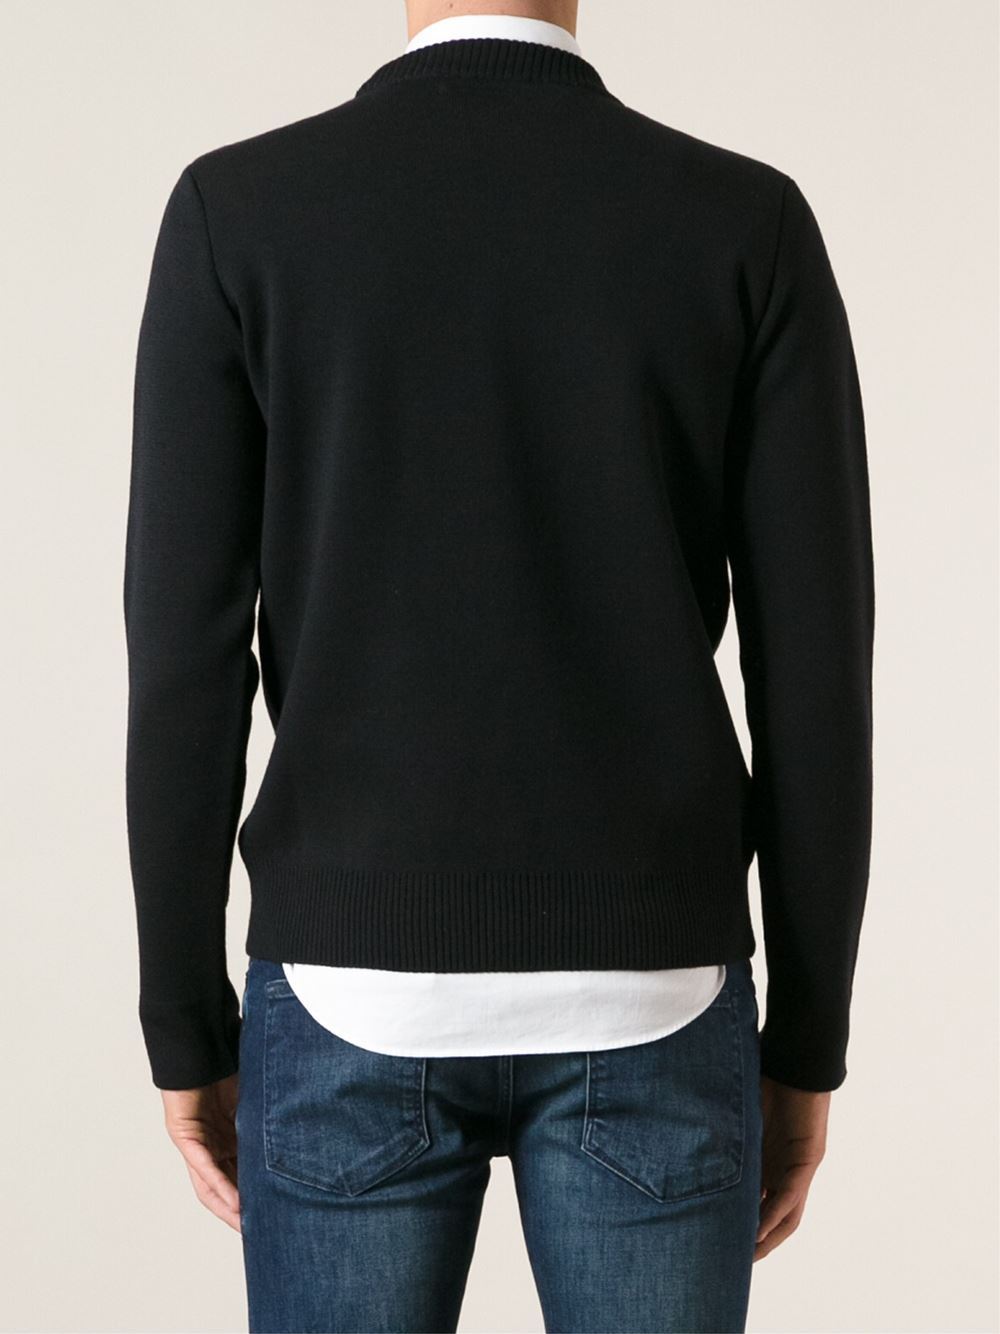 Download Lyst - AMI Mock Neck Sweater in Black for Men